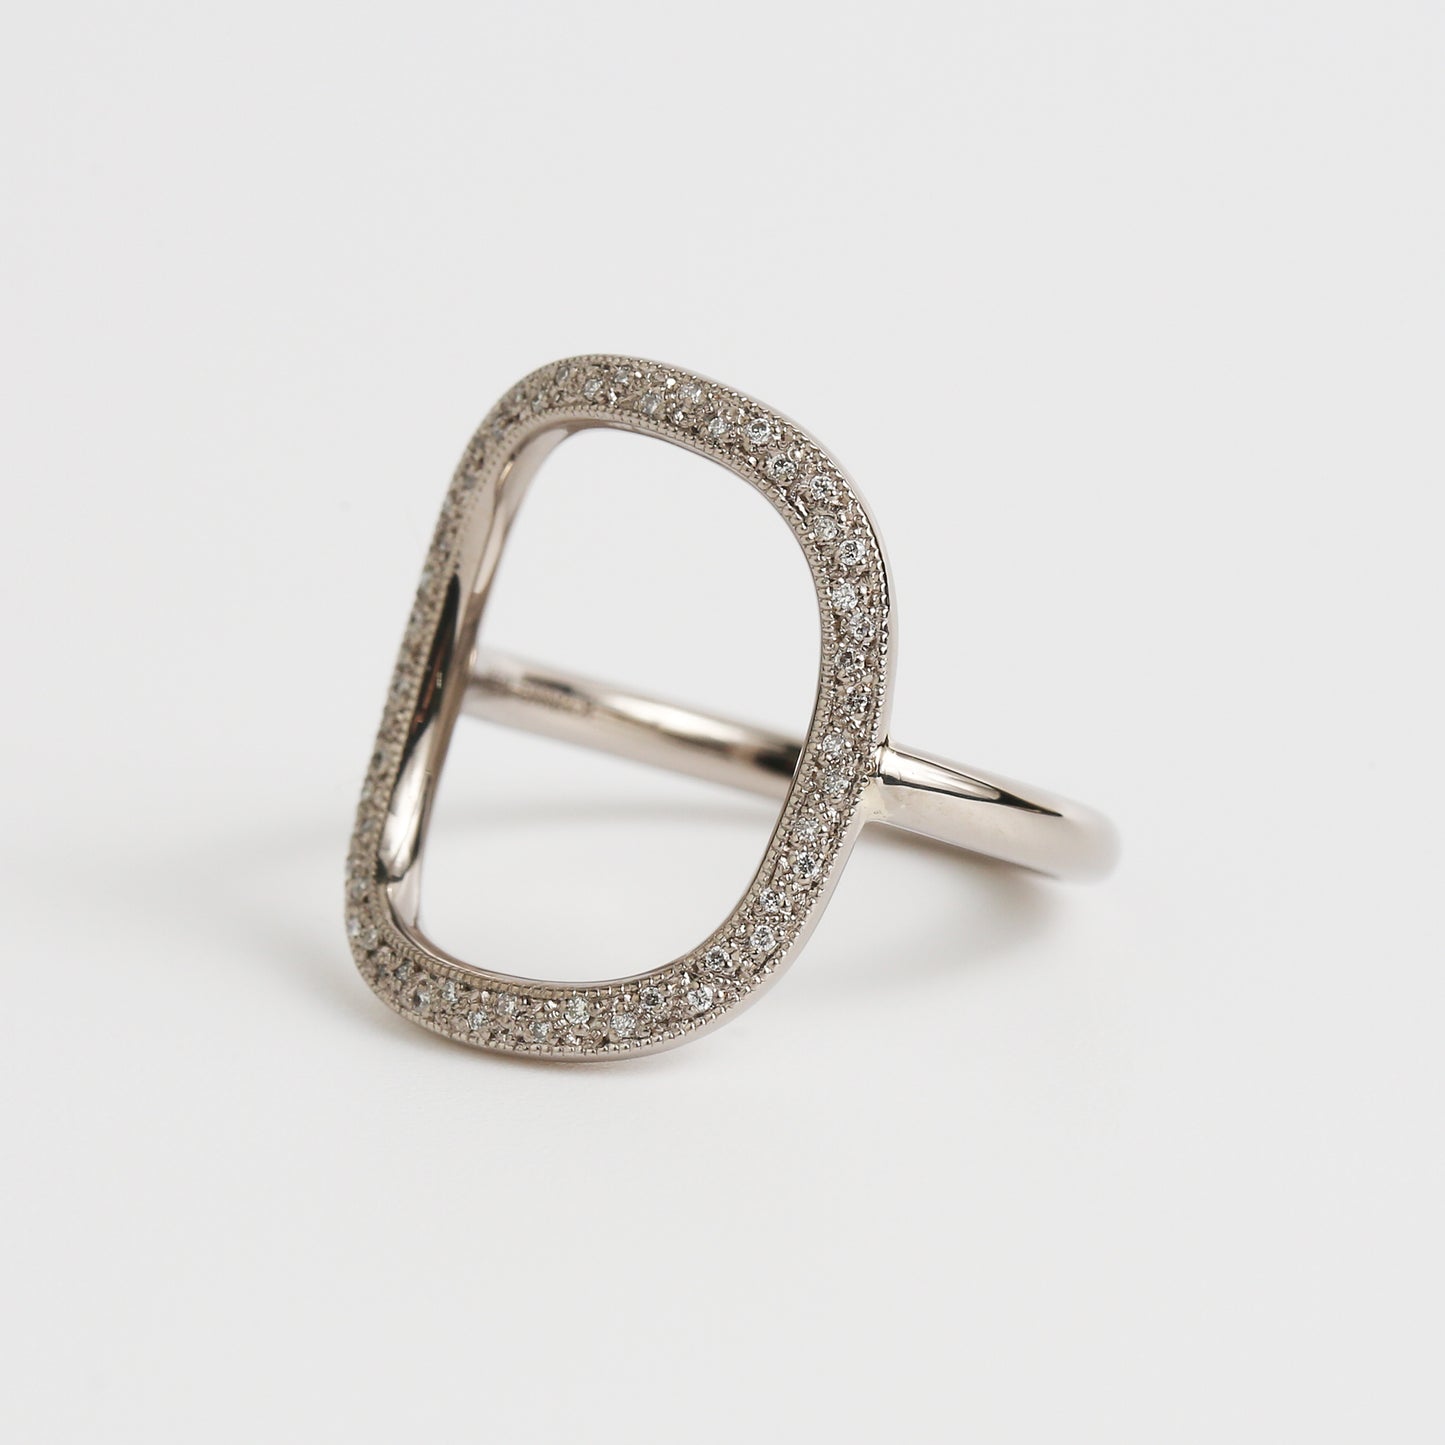 【 Le Marais 】Oval Diamond Ring